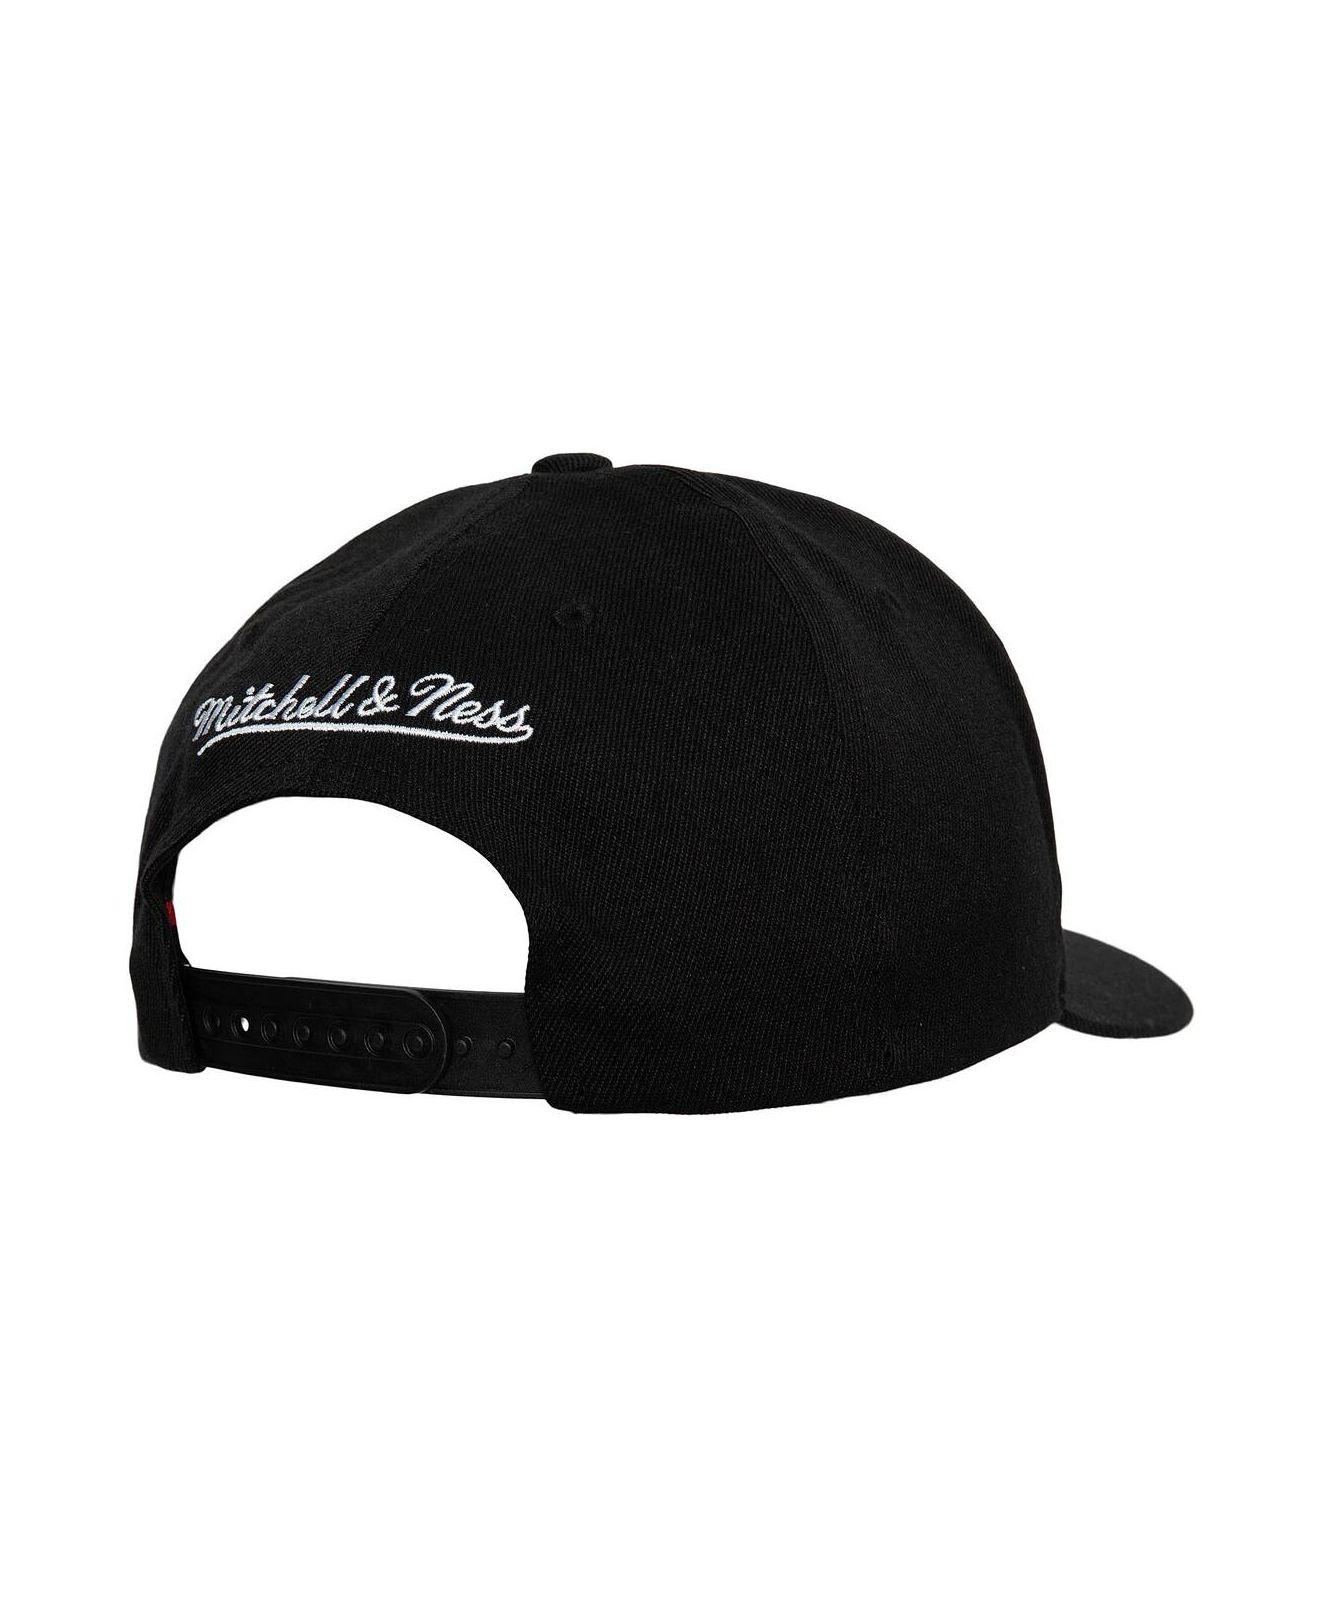 Lids San Jose Sharks Mitchell & Ness LOFI Pro Snapback Hat - Black